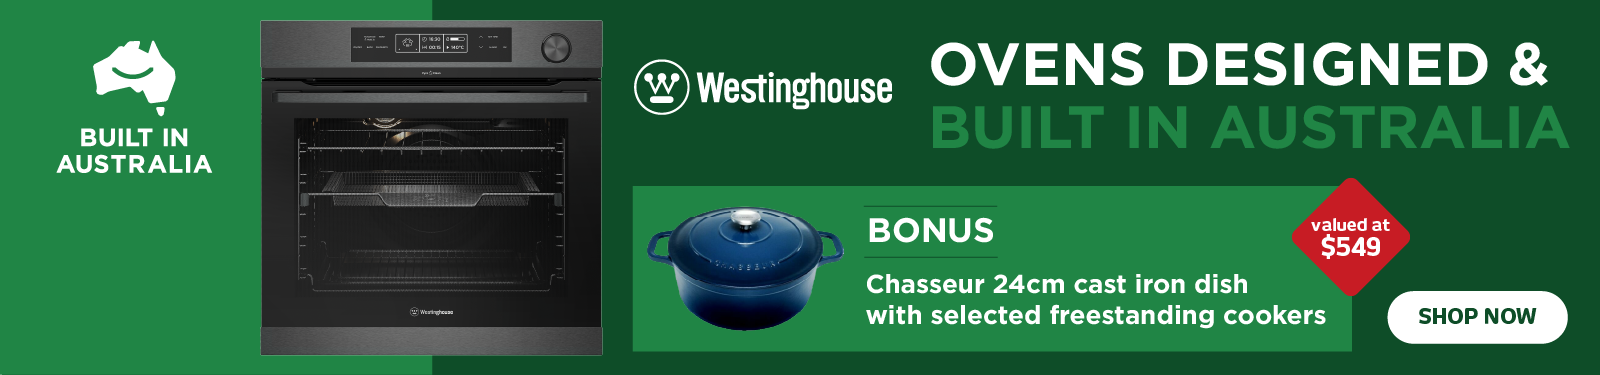 Westinghouse Ovens Designed & Built in Australia - Bonus Chasseur Cast Iron Dish